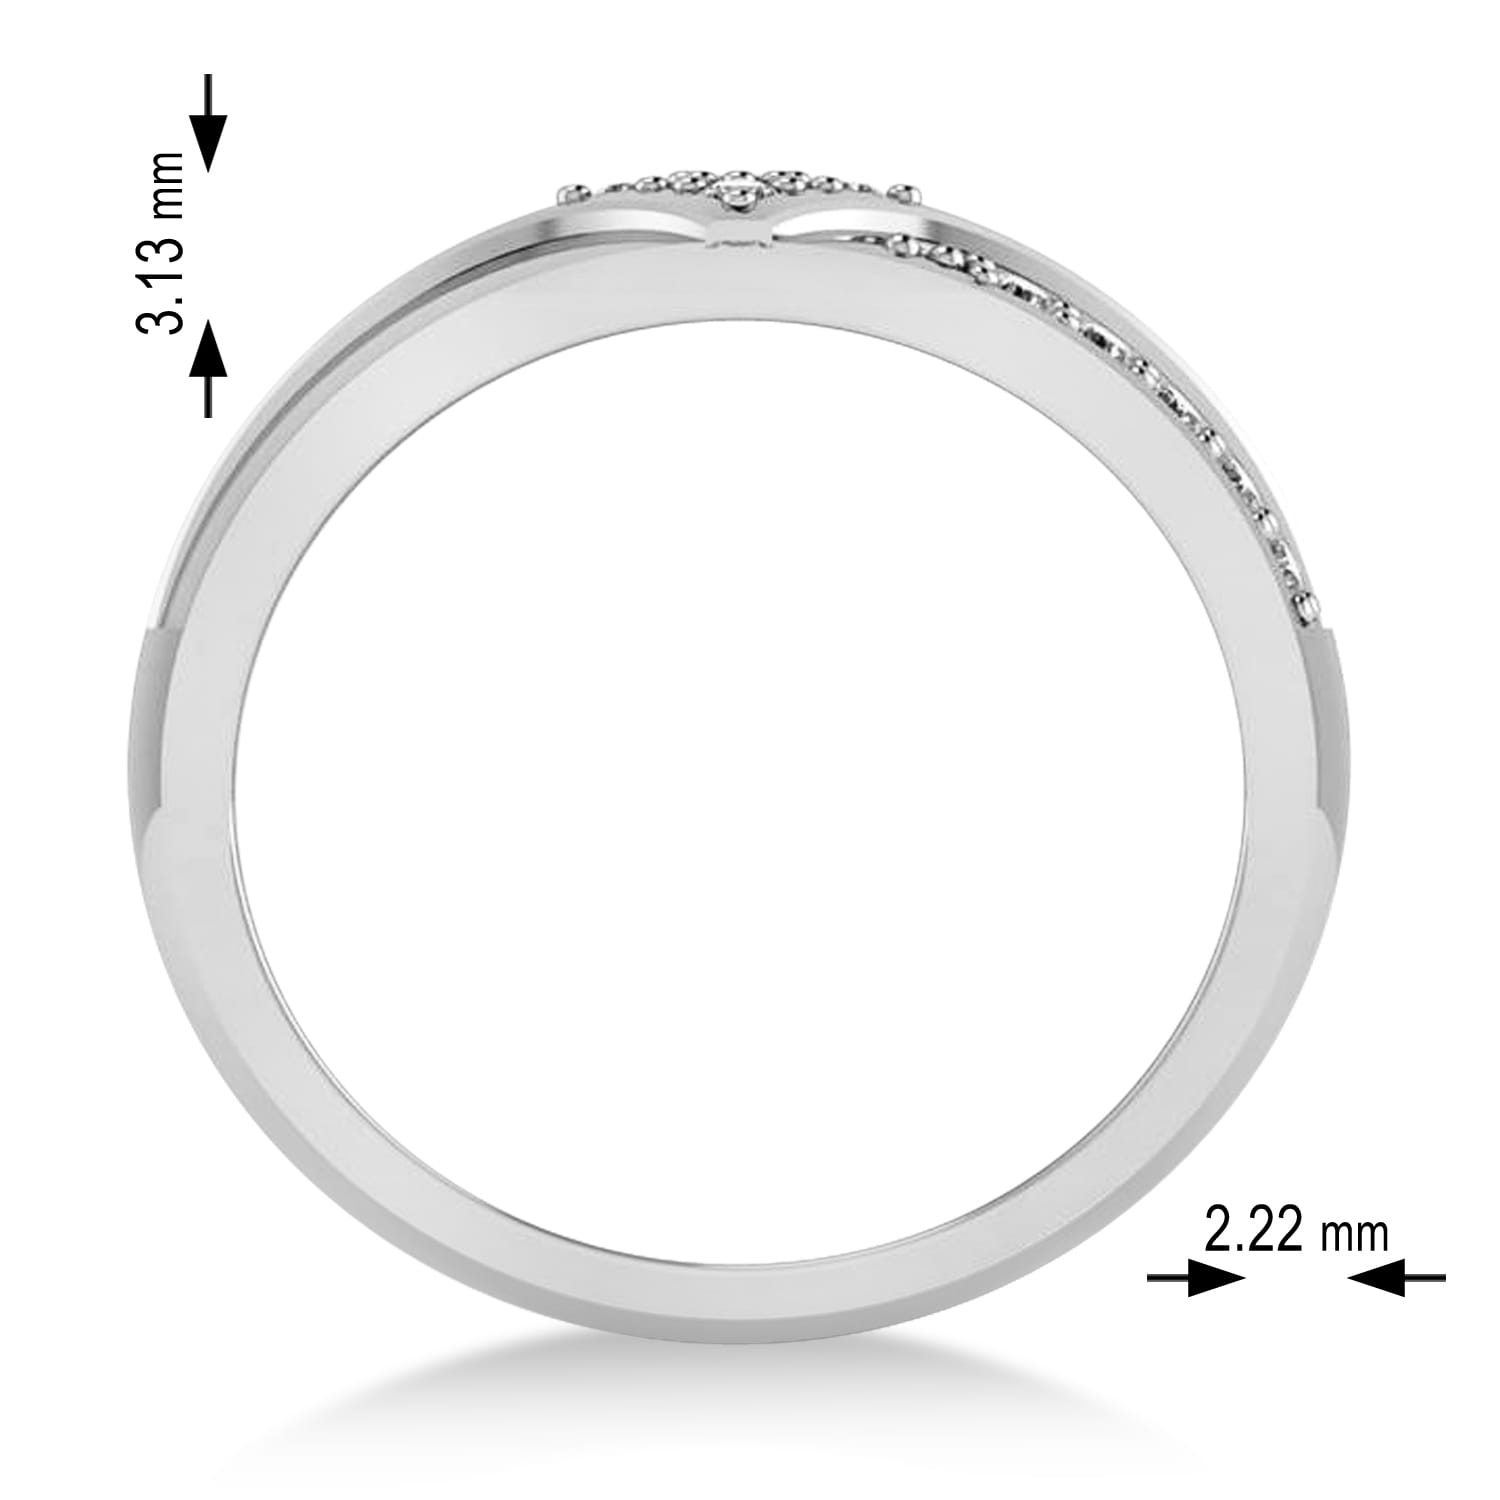 Diamond Gents Ring/Wedding Band For Men 14k White Gold (0.30ct)